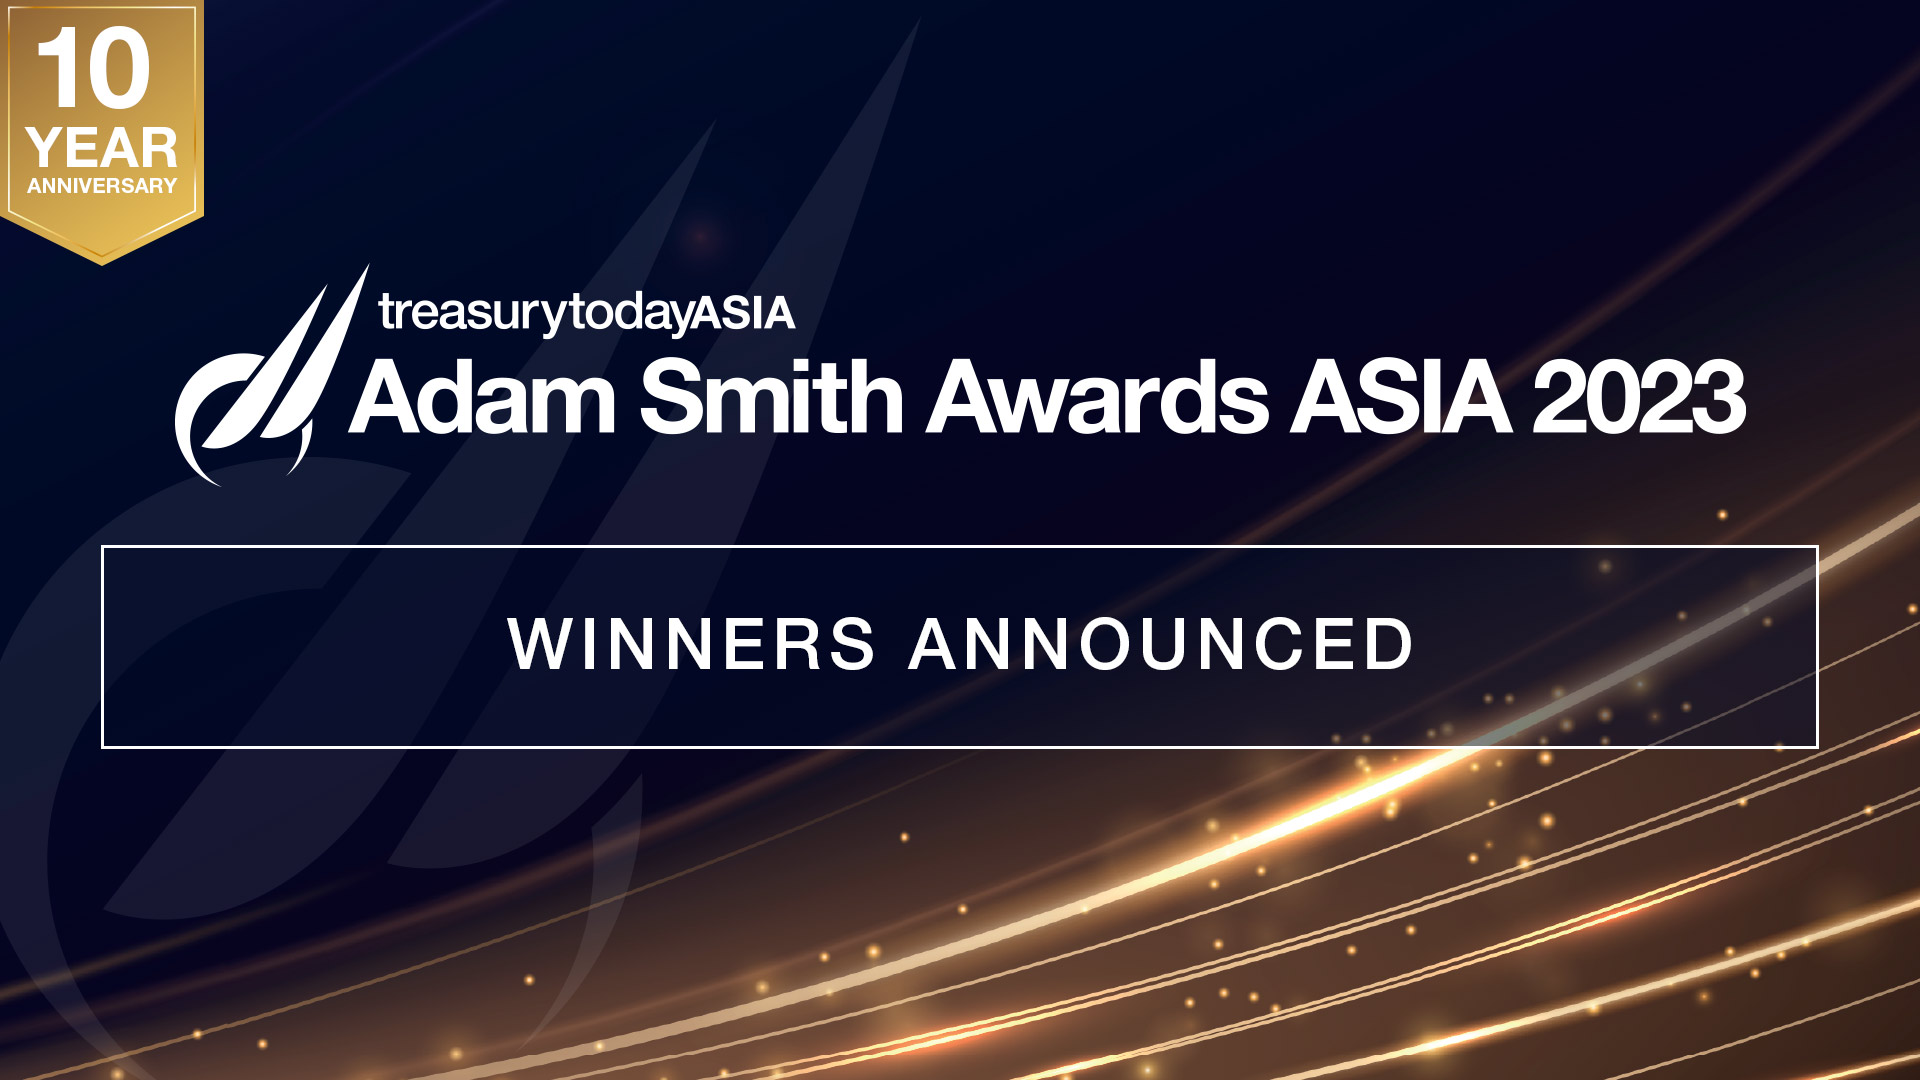 Adam Smith Awards Asia 2023 winners announced